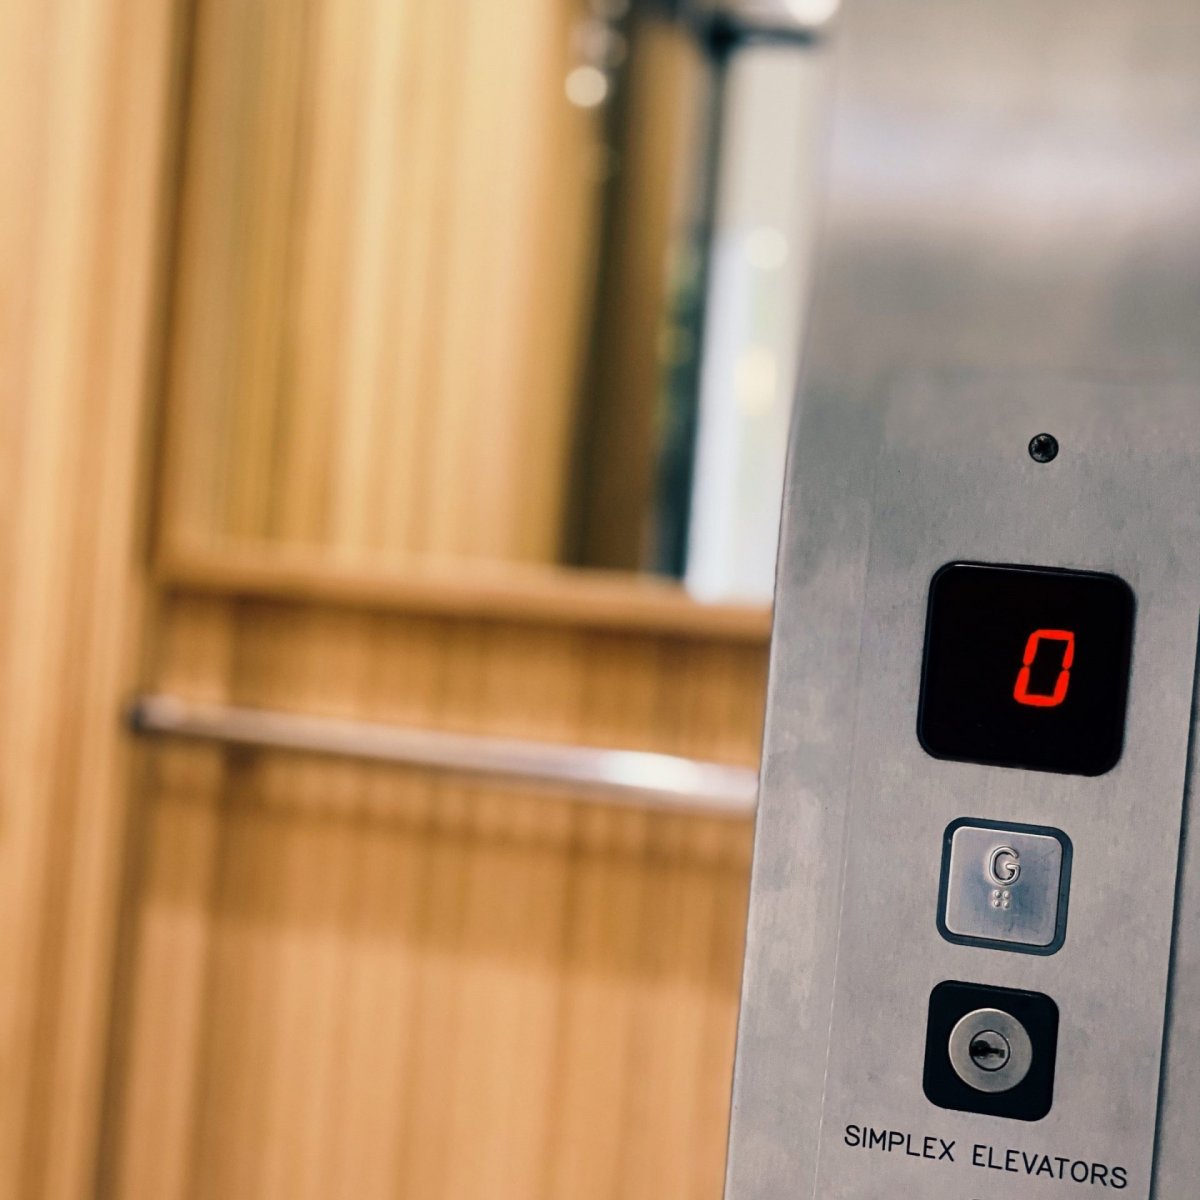  Commercial Elevators Australia | Simplex Elevators Gallery Image 2